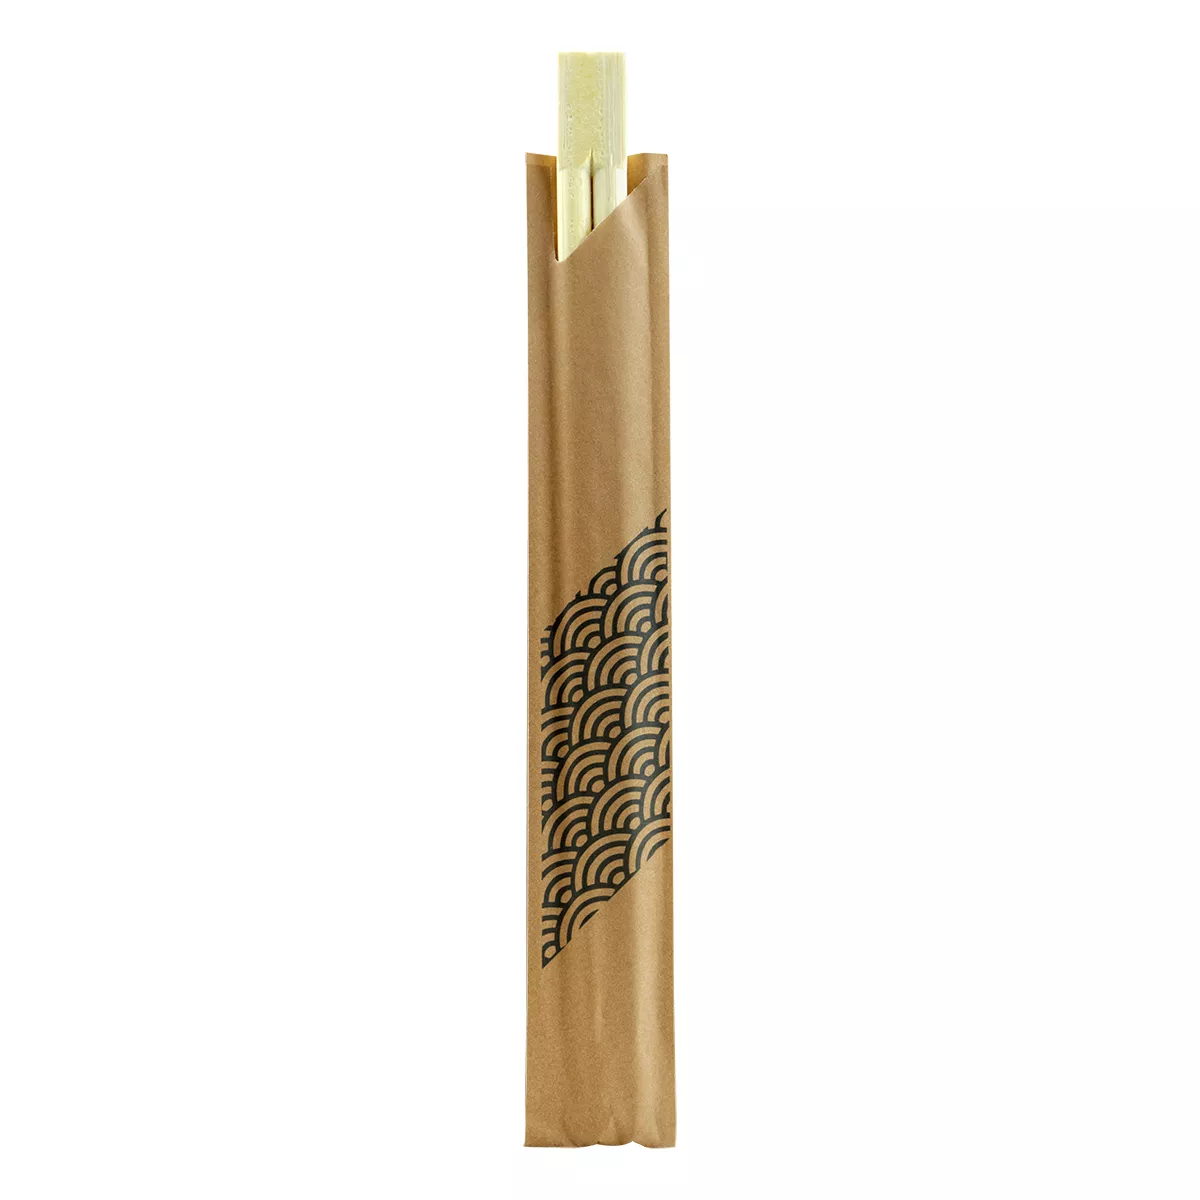 Betisoare din bambus cu ambalaj 21cm (100buc), [],asianfood.ro